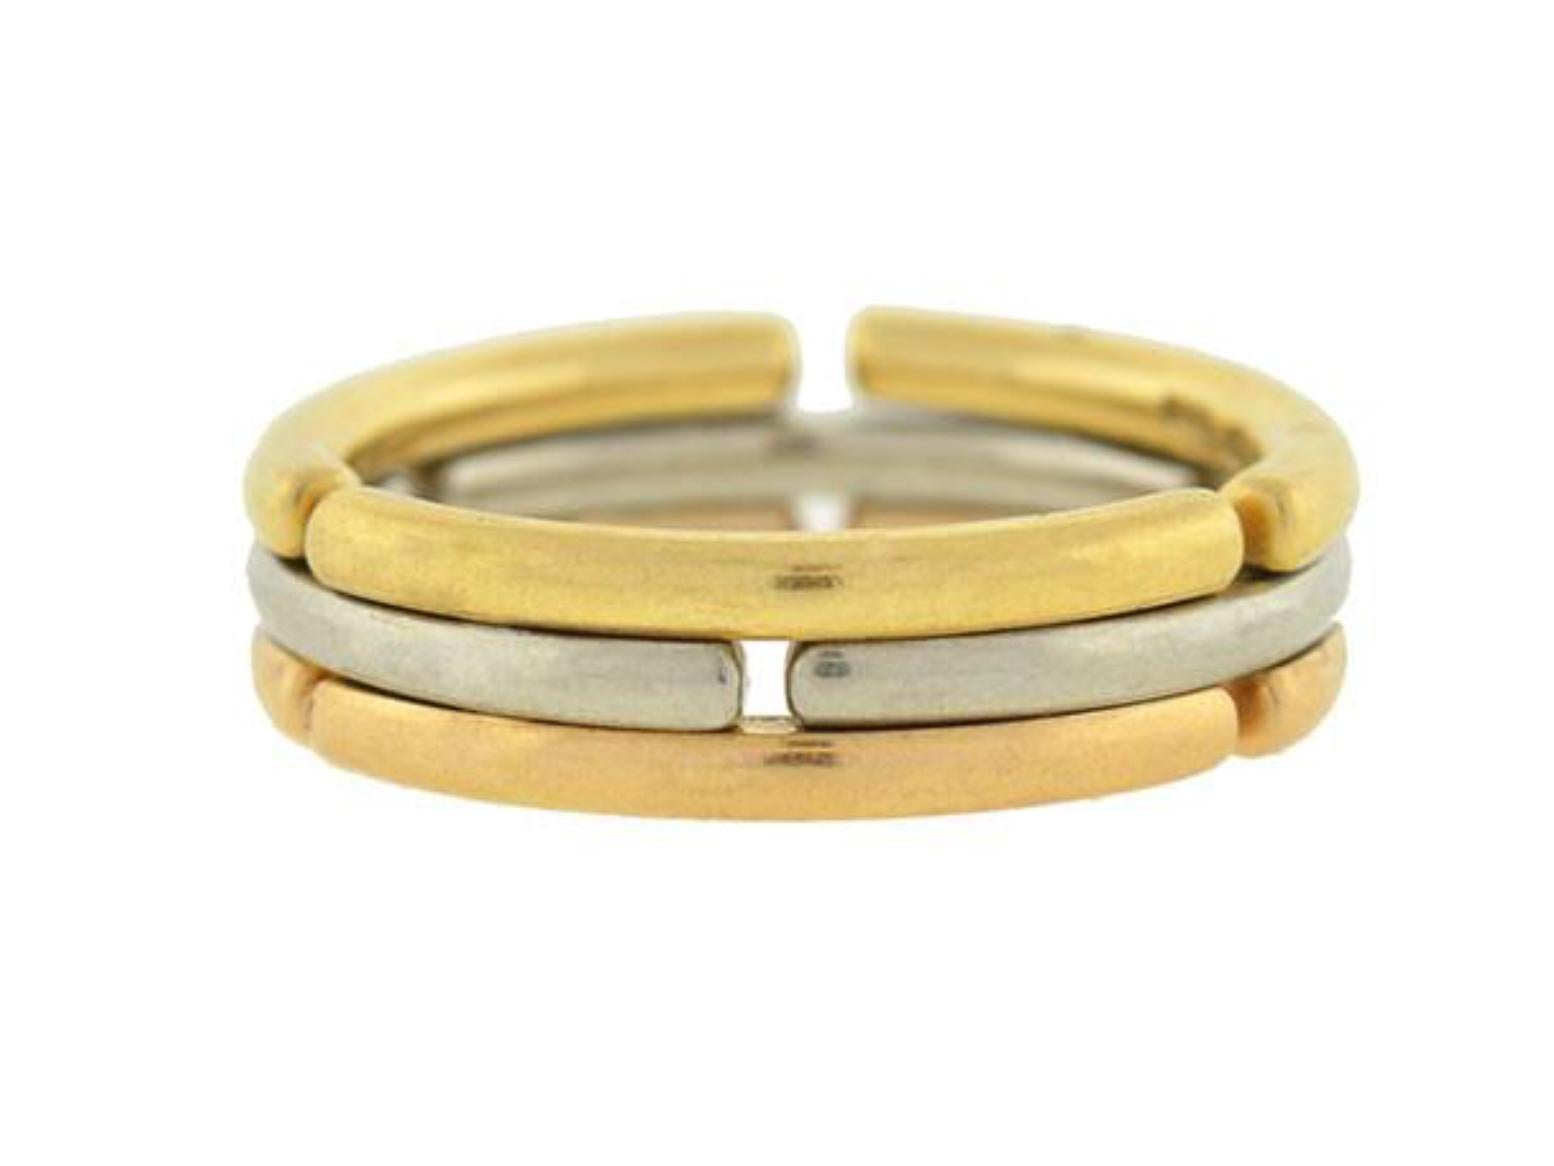 A Bulgari tri-color 18 karat yellow gold collapsible men’s ring. Size 11, not resizable.